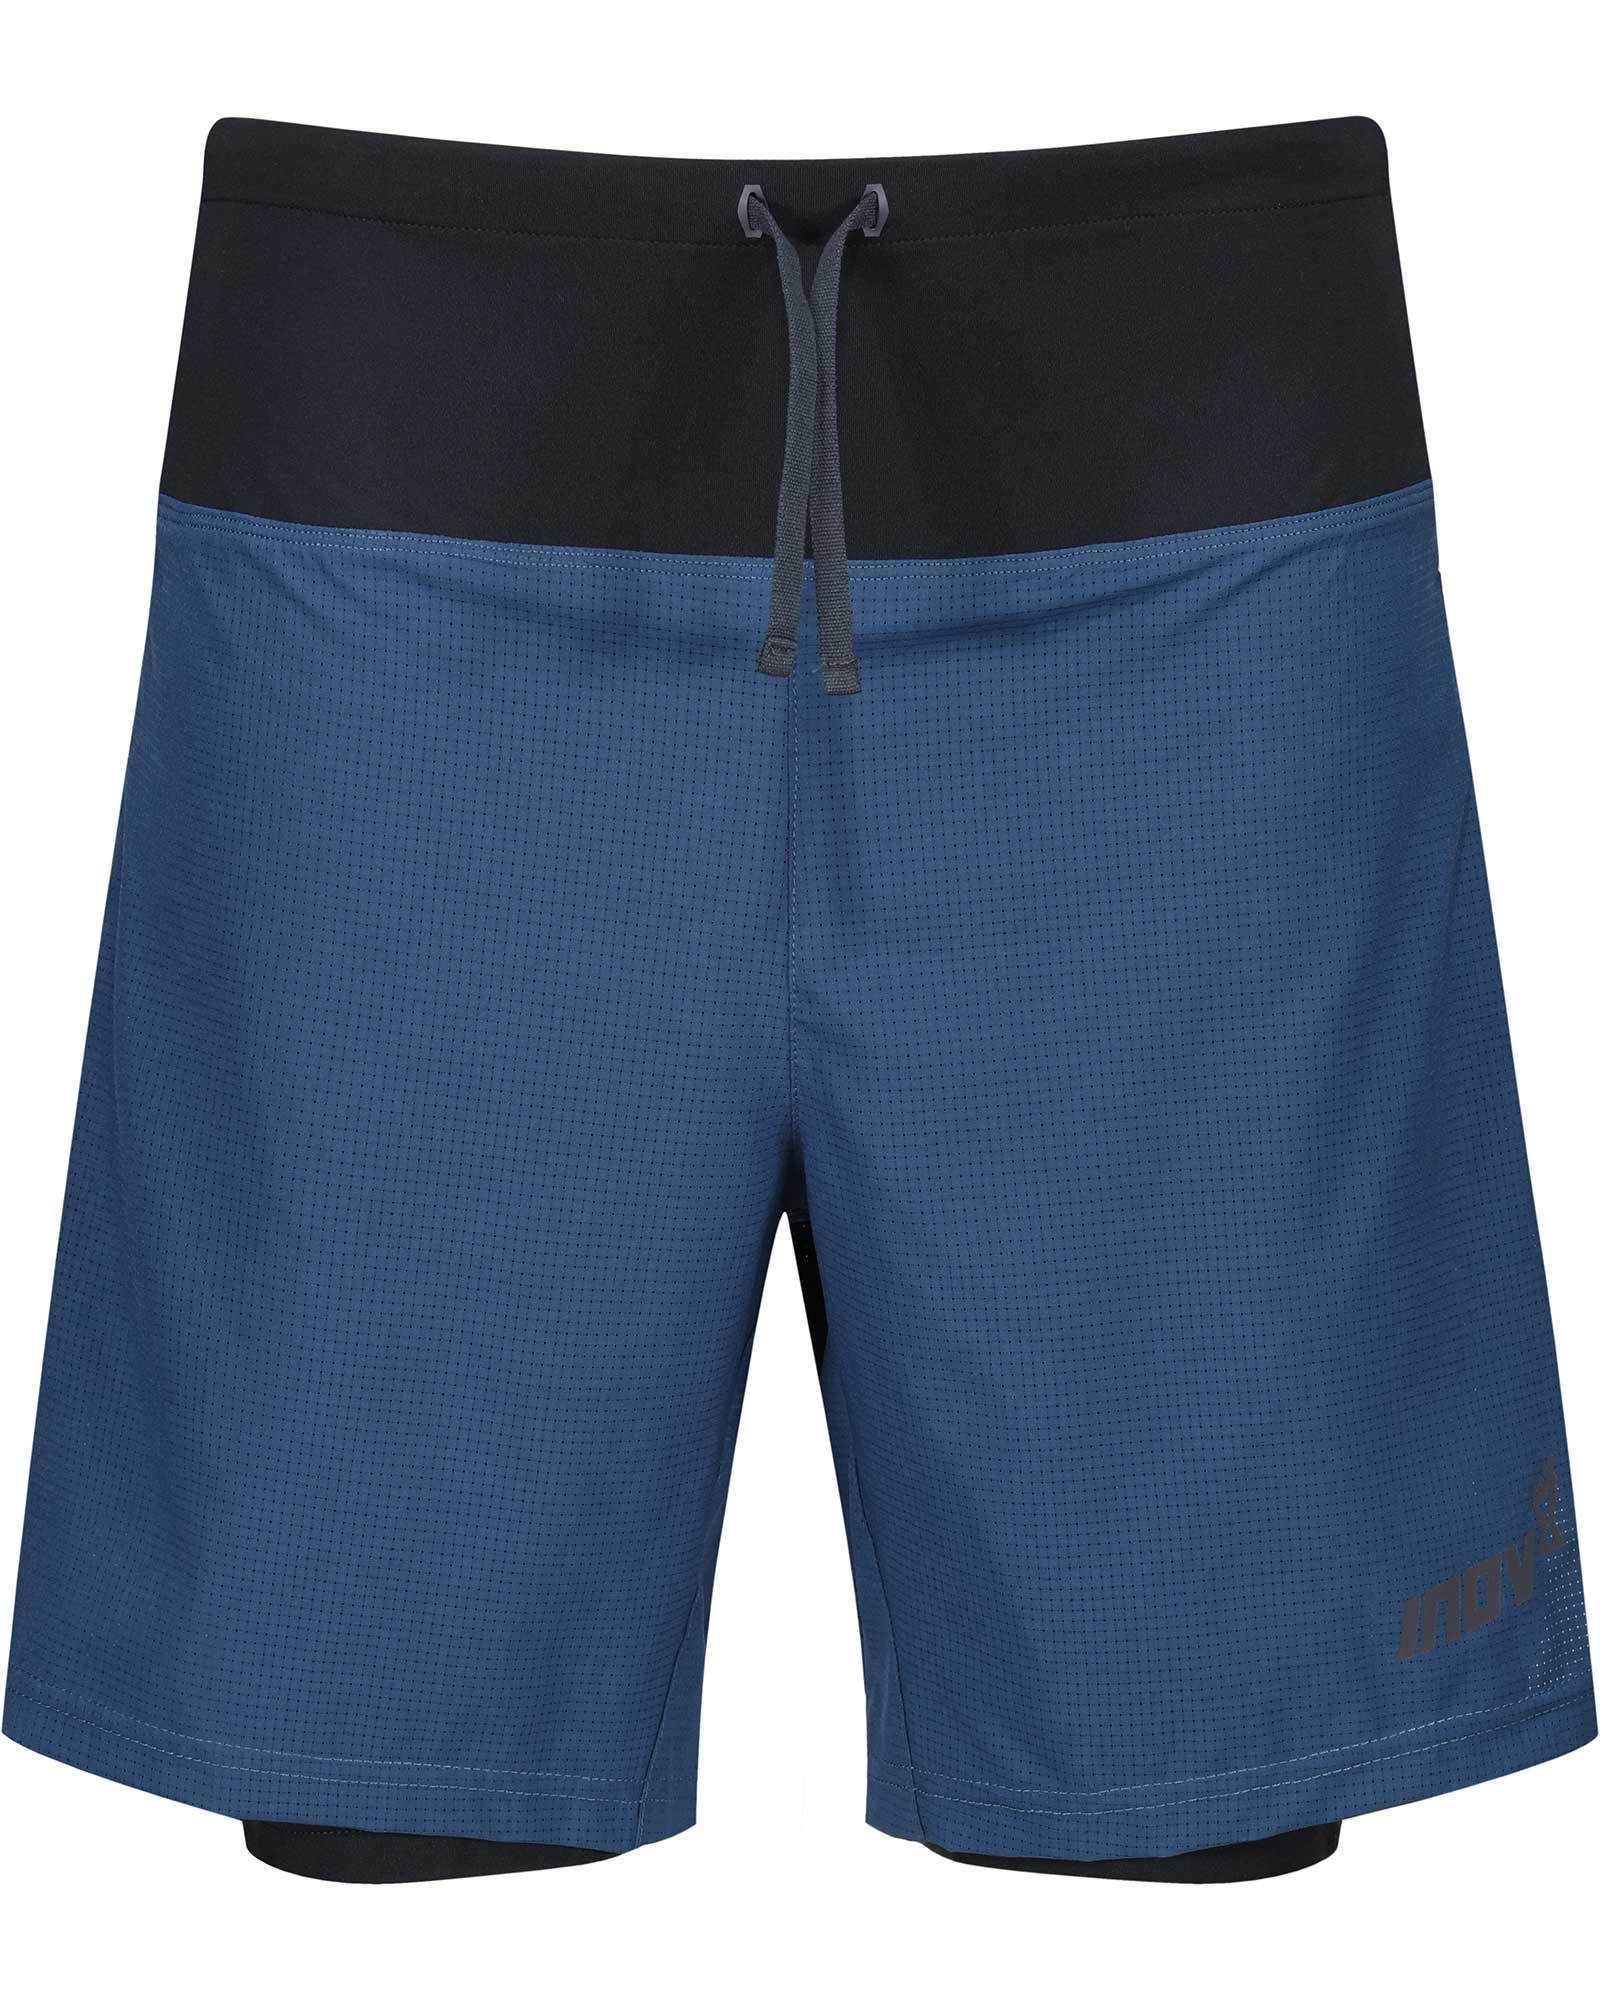 Inov 8 TrailFly Ultra Men’s 7" 2in1 Shorts - Navy L